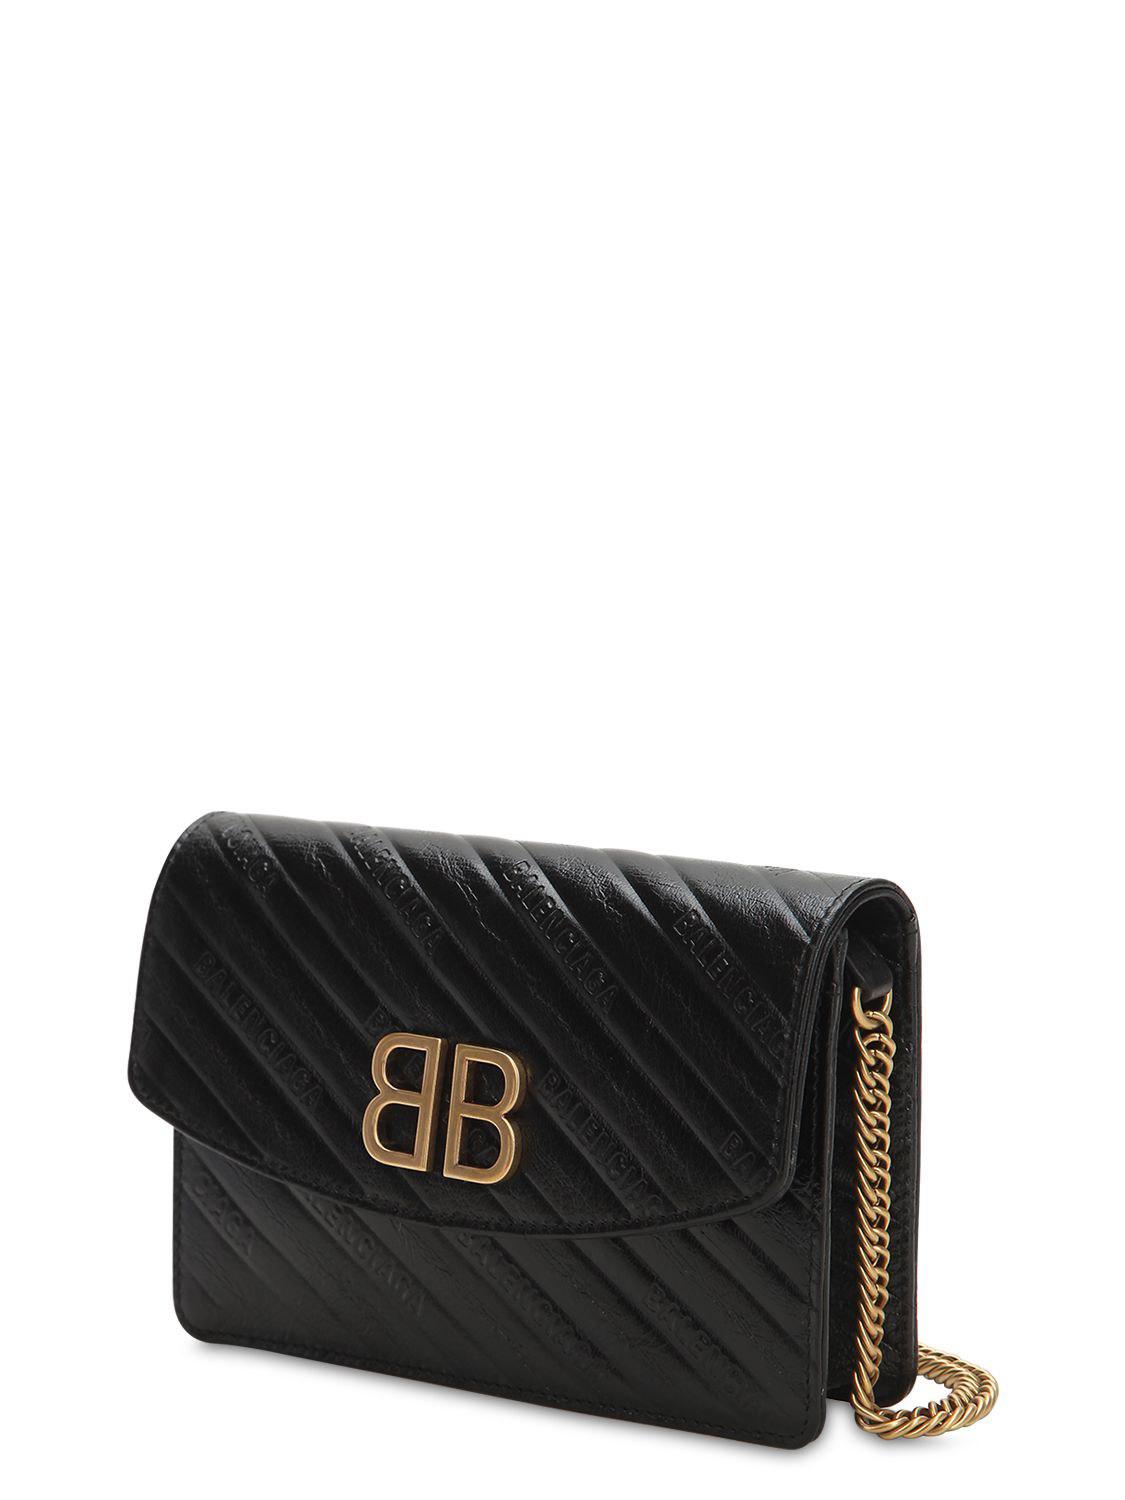 Balenciaga Bb Chain Wallet Leather Bag in Black - Lyst